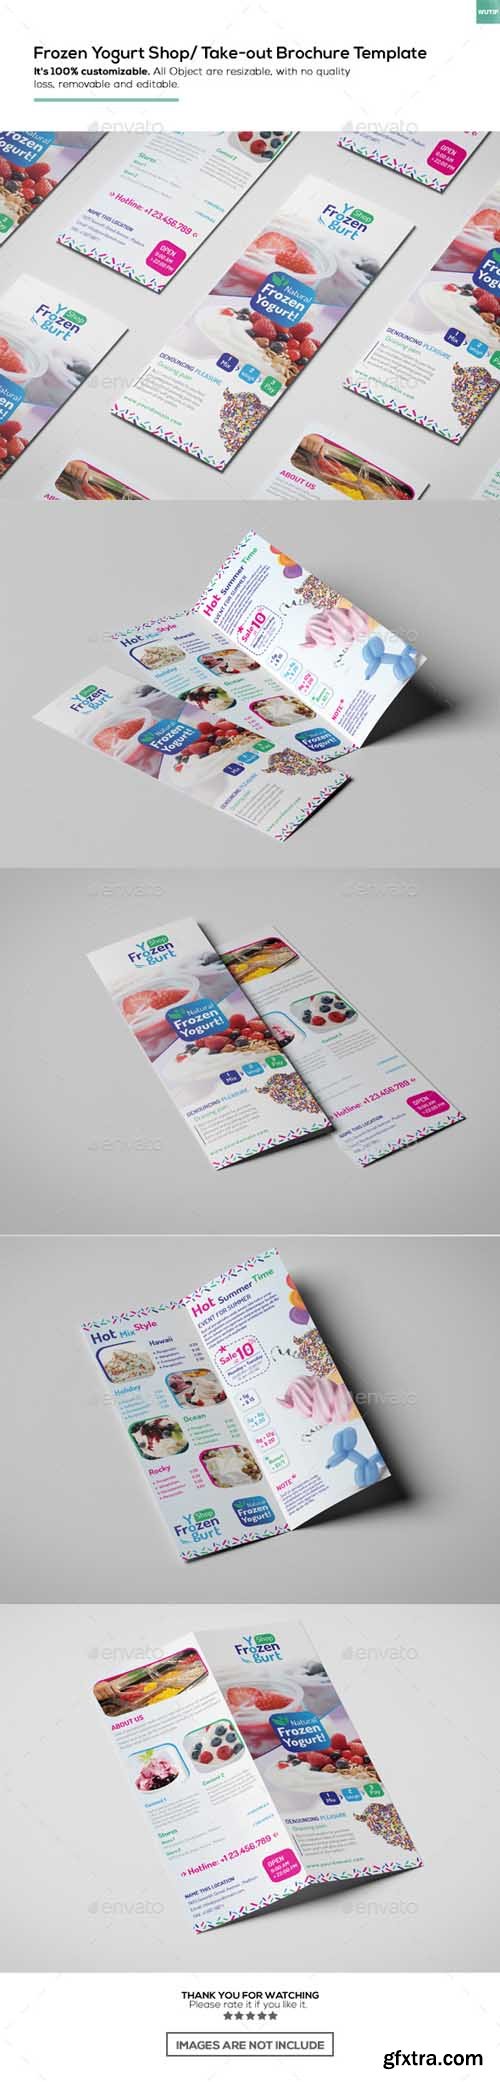 GR - Frozen Yogurt Shop/ Take-out Brochure Template 16455695